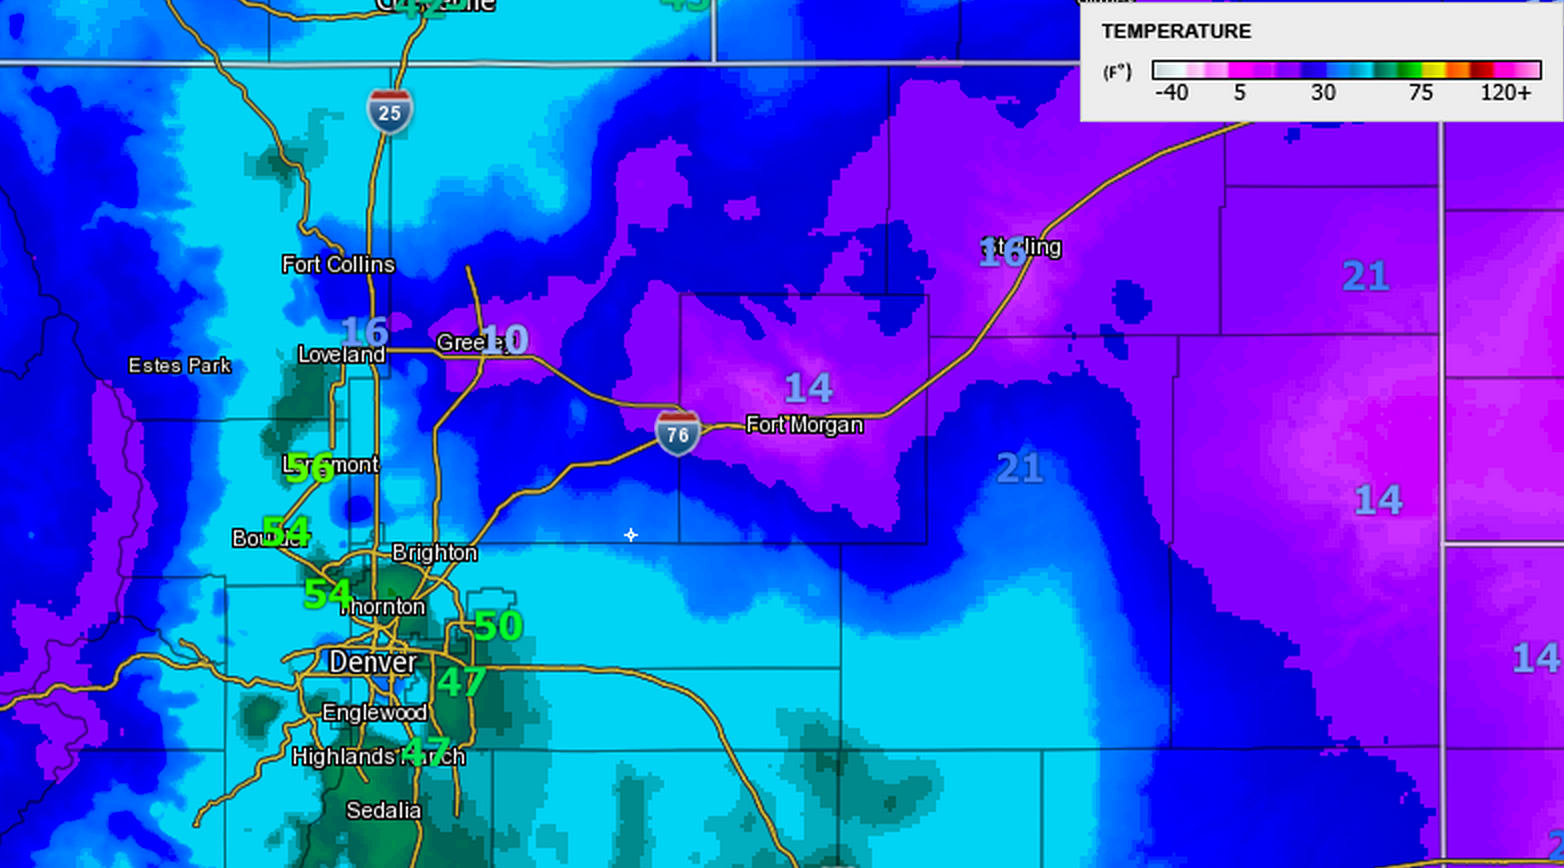 Example of extreme temperature gradients across Front Range of Colorado